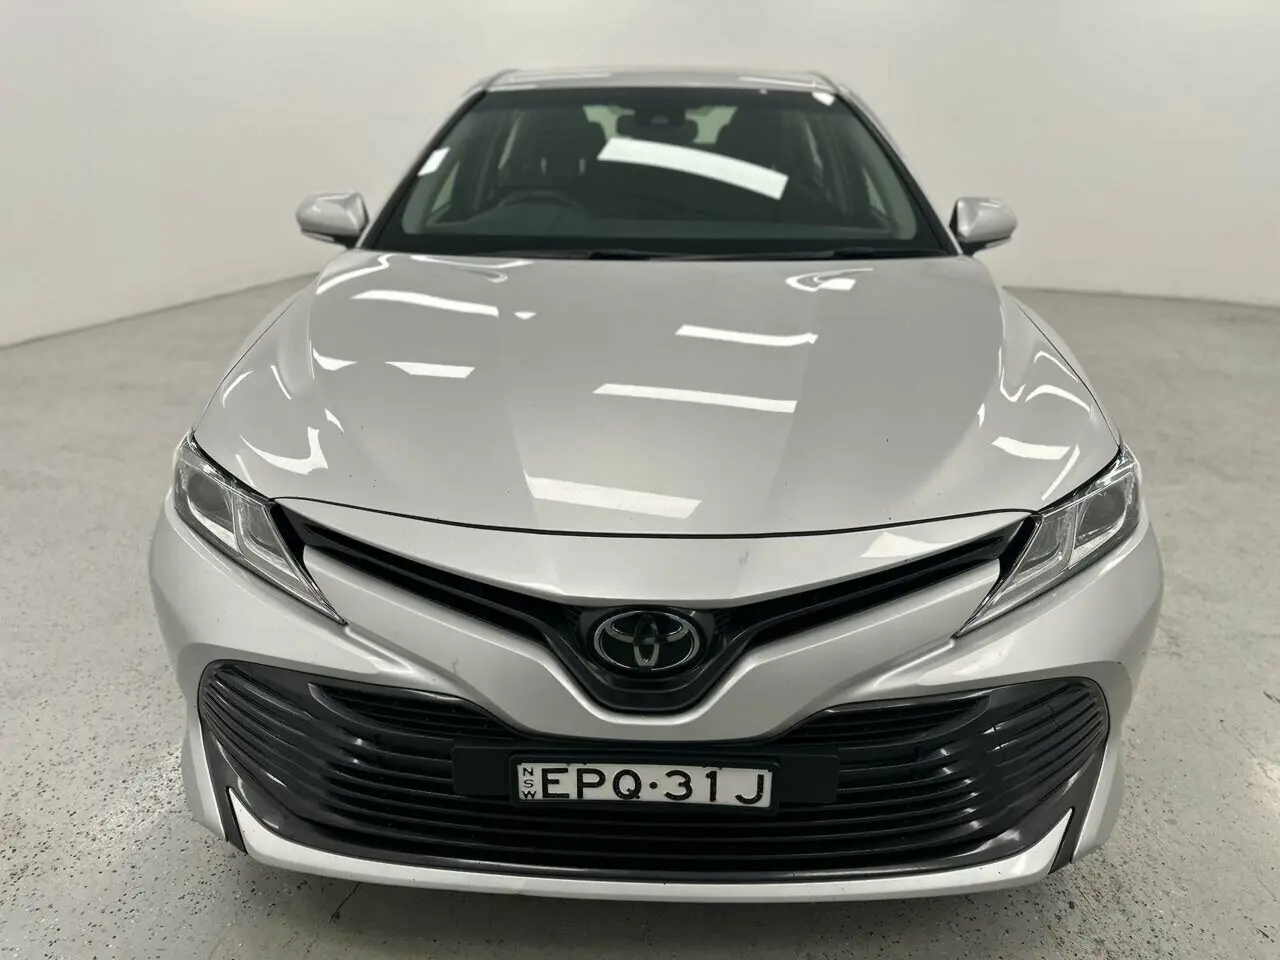 2019 Toyota Camry Image 2